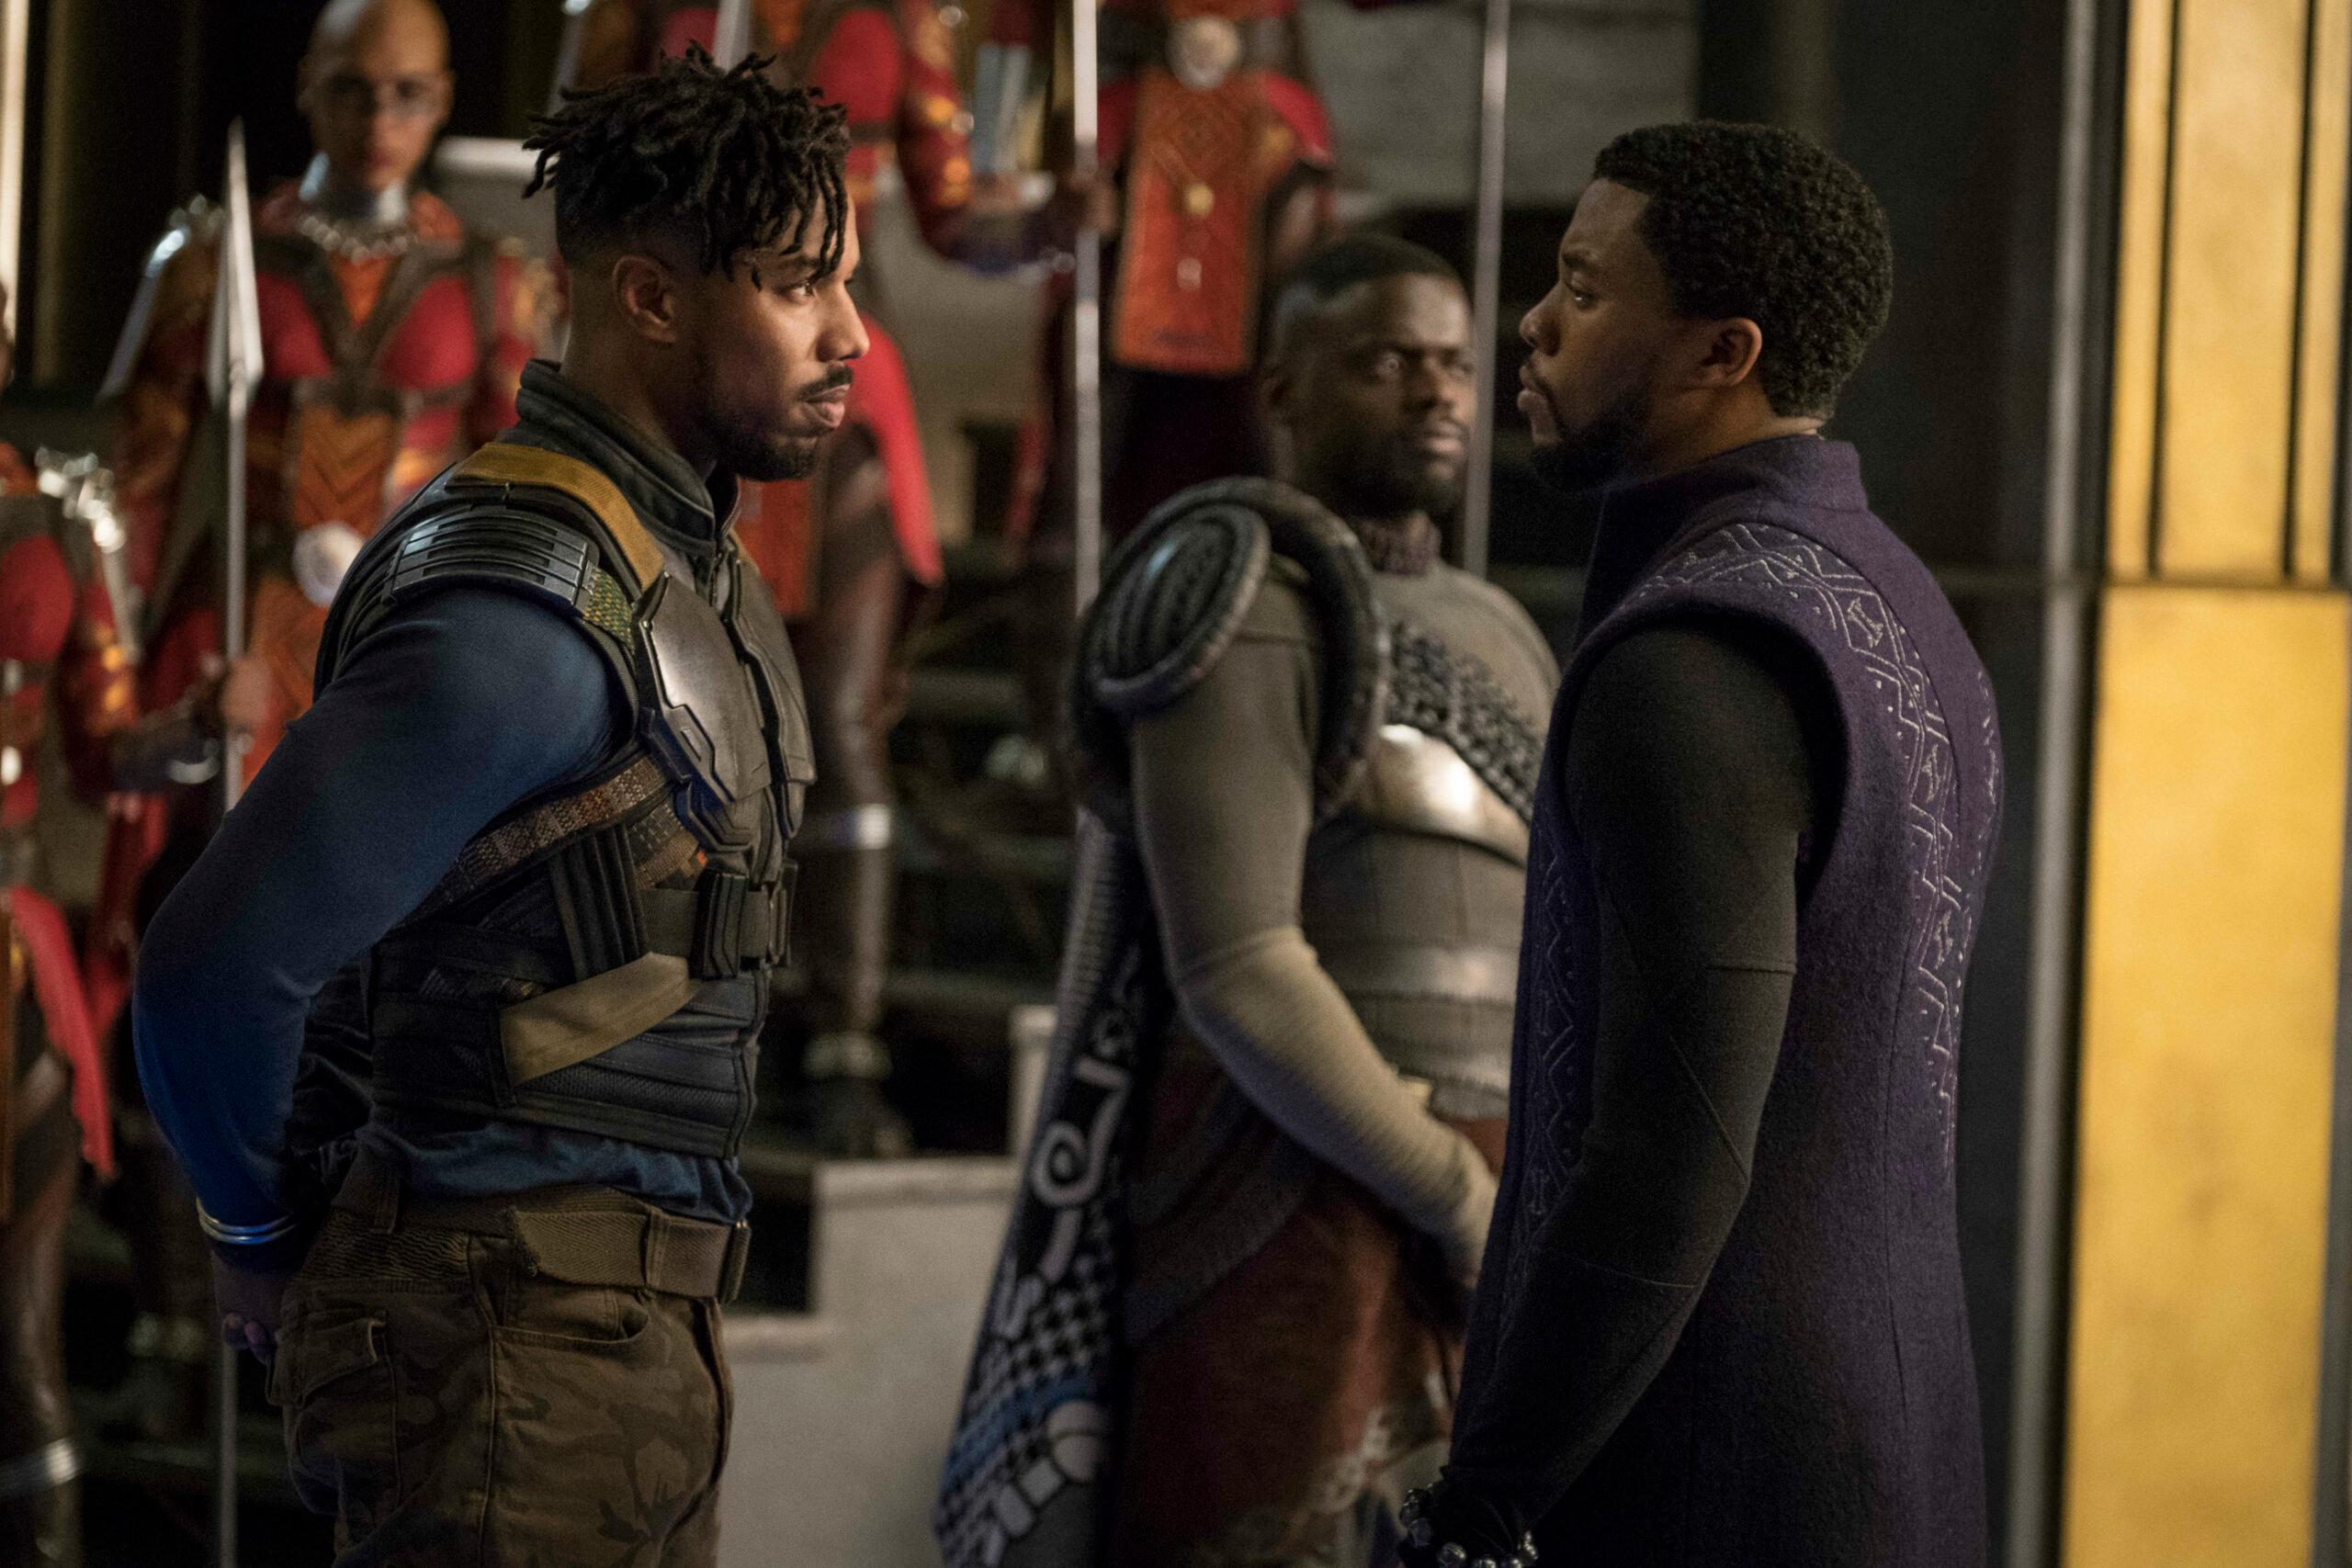 Michael B. Jordan and Chadwick Boseman on the set of 2018 Black Panther Movie Set